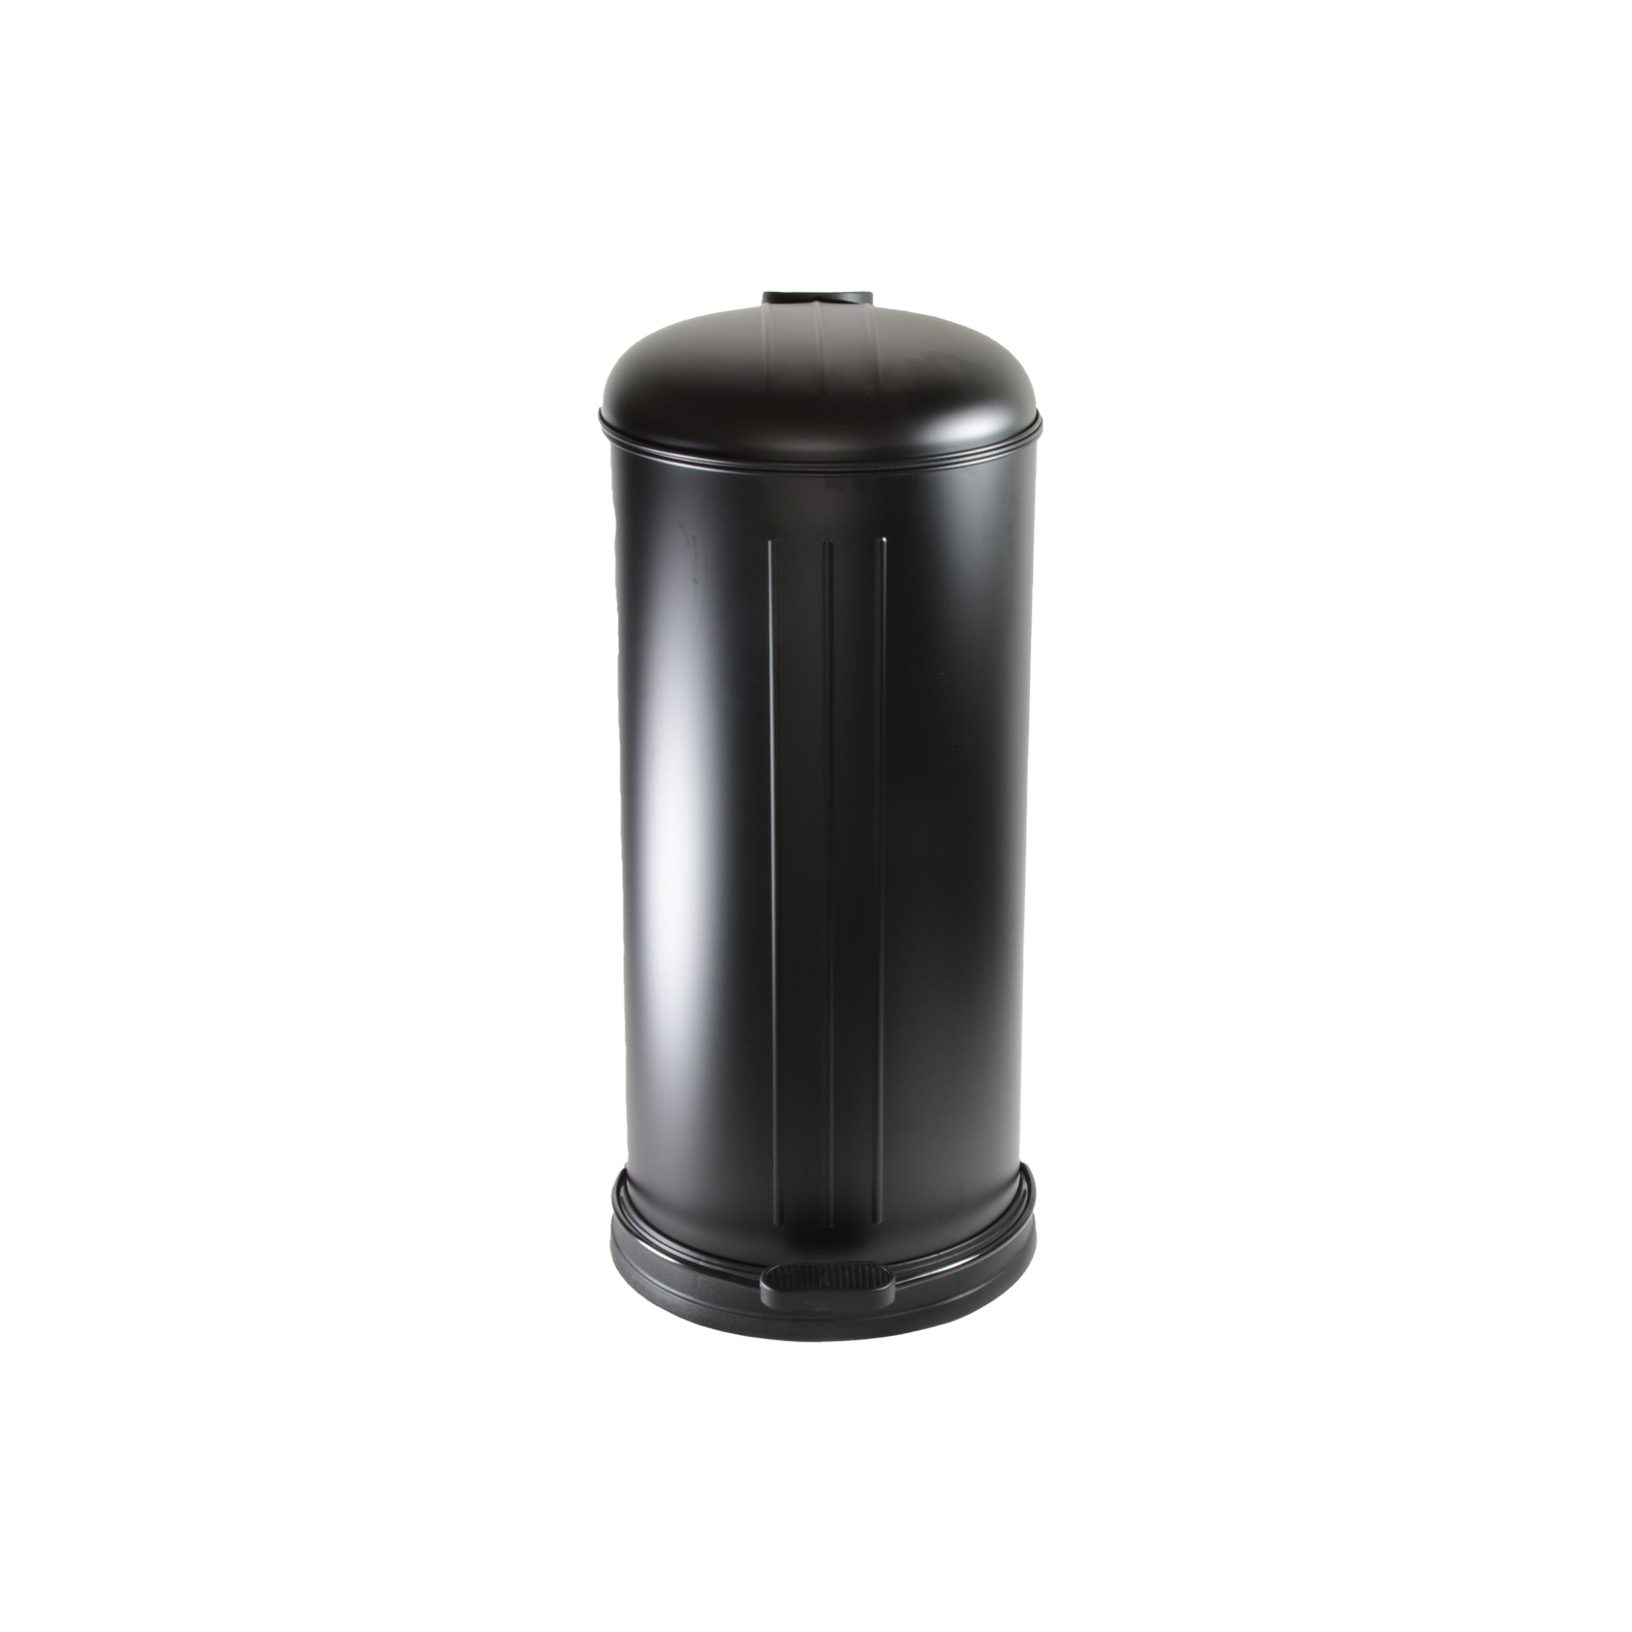 B&S Mülleimer 12 Liter Abfalleimer Treteimer Metall schwarz matt mit Absenkautomatik, mit Absenkautomatik | Mülleimer